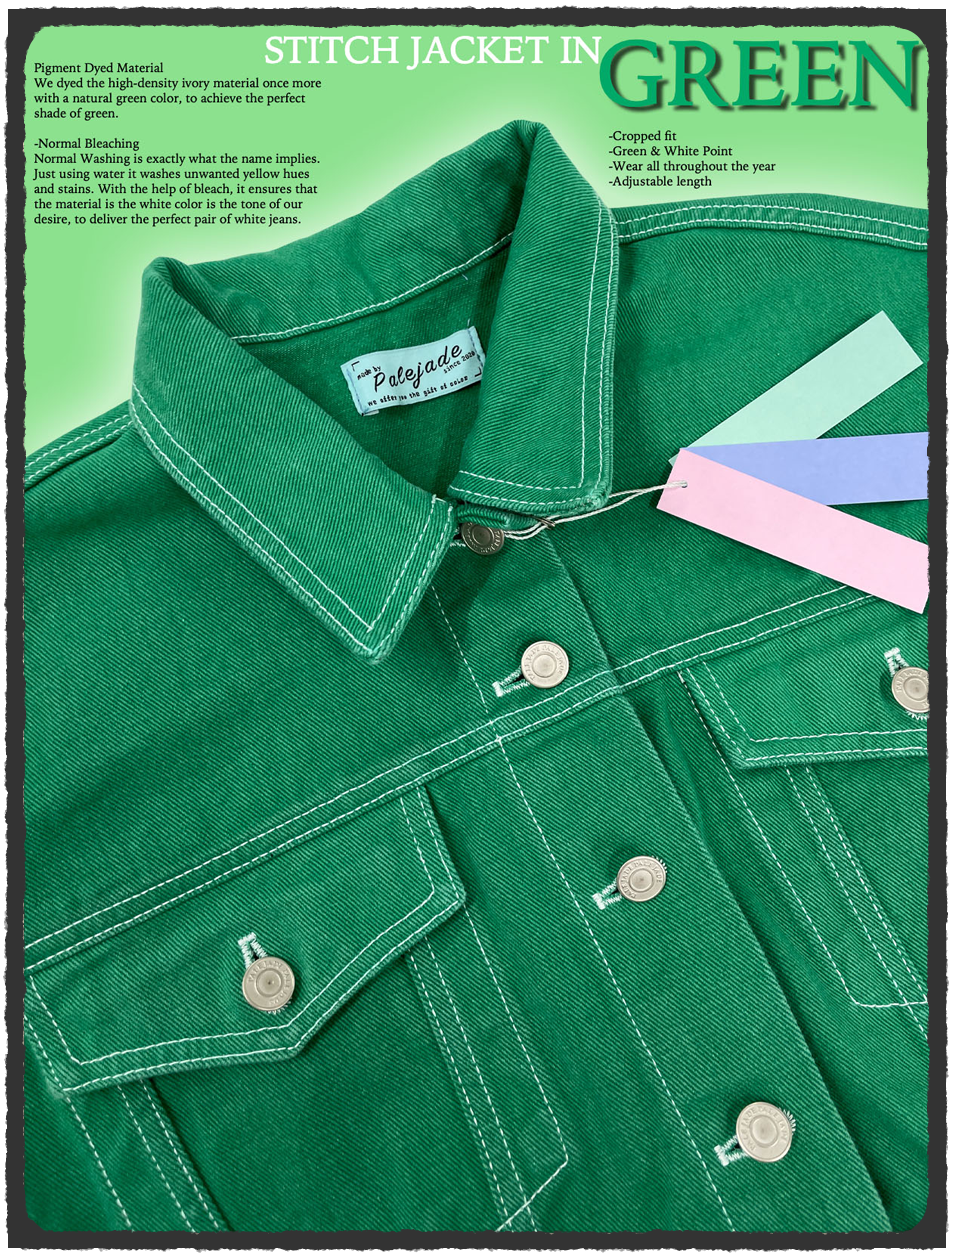 Stitch Jacket In GREEN